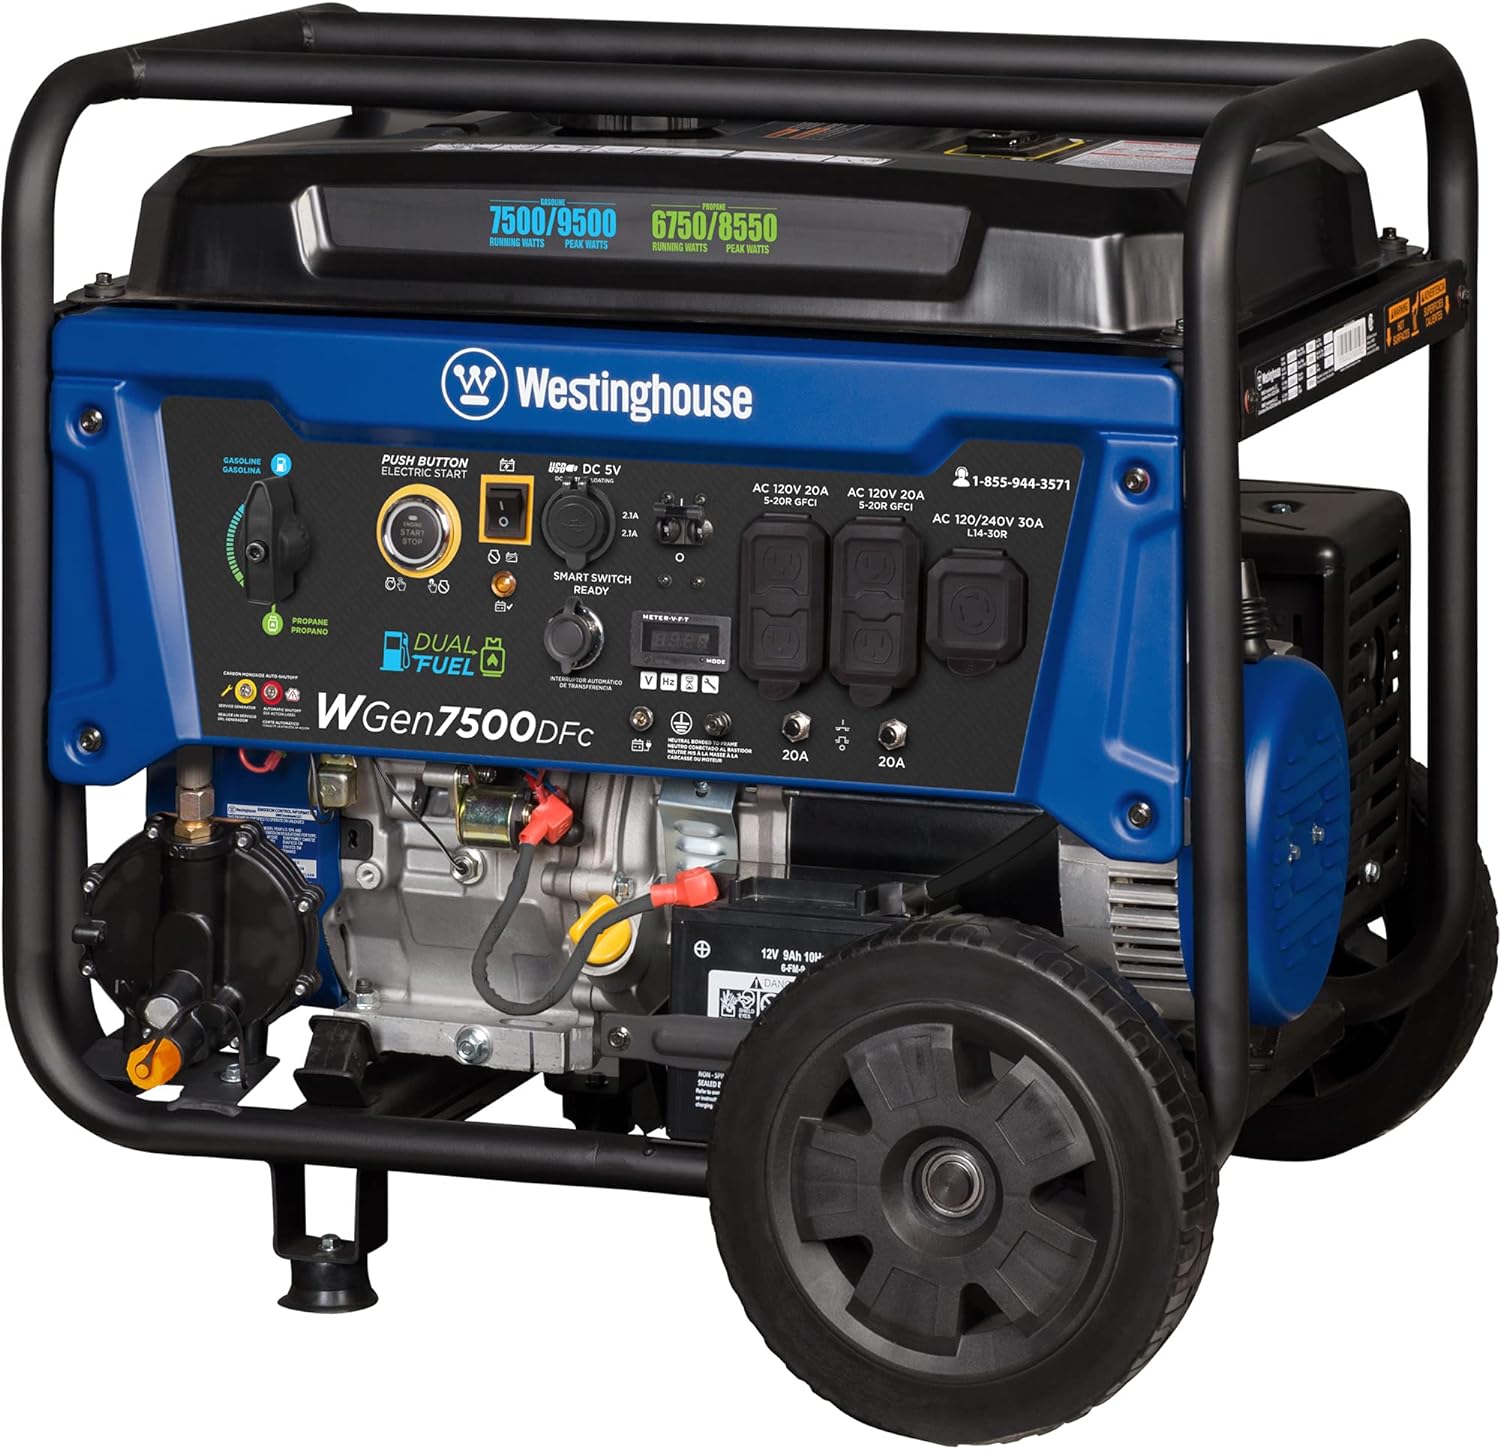 Westinghouse WGen7500DFc Generator 7500W/9500W 30 Amp Remote Start Dual Fuel with CO Sensor New